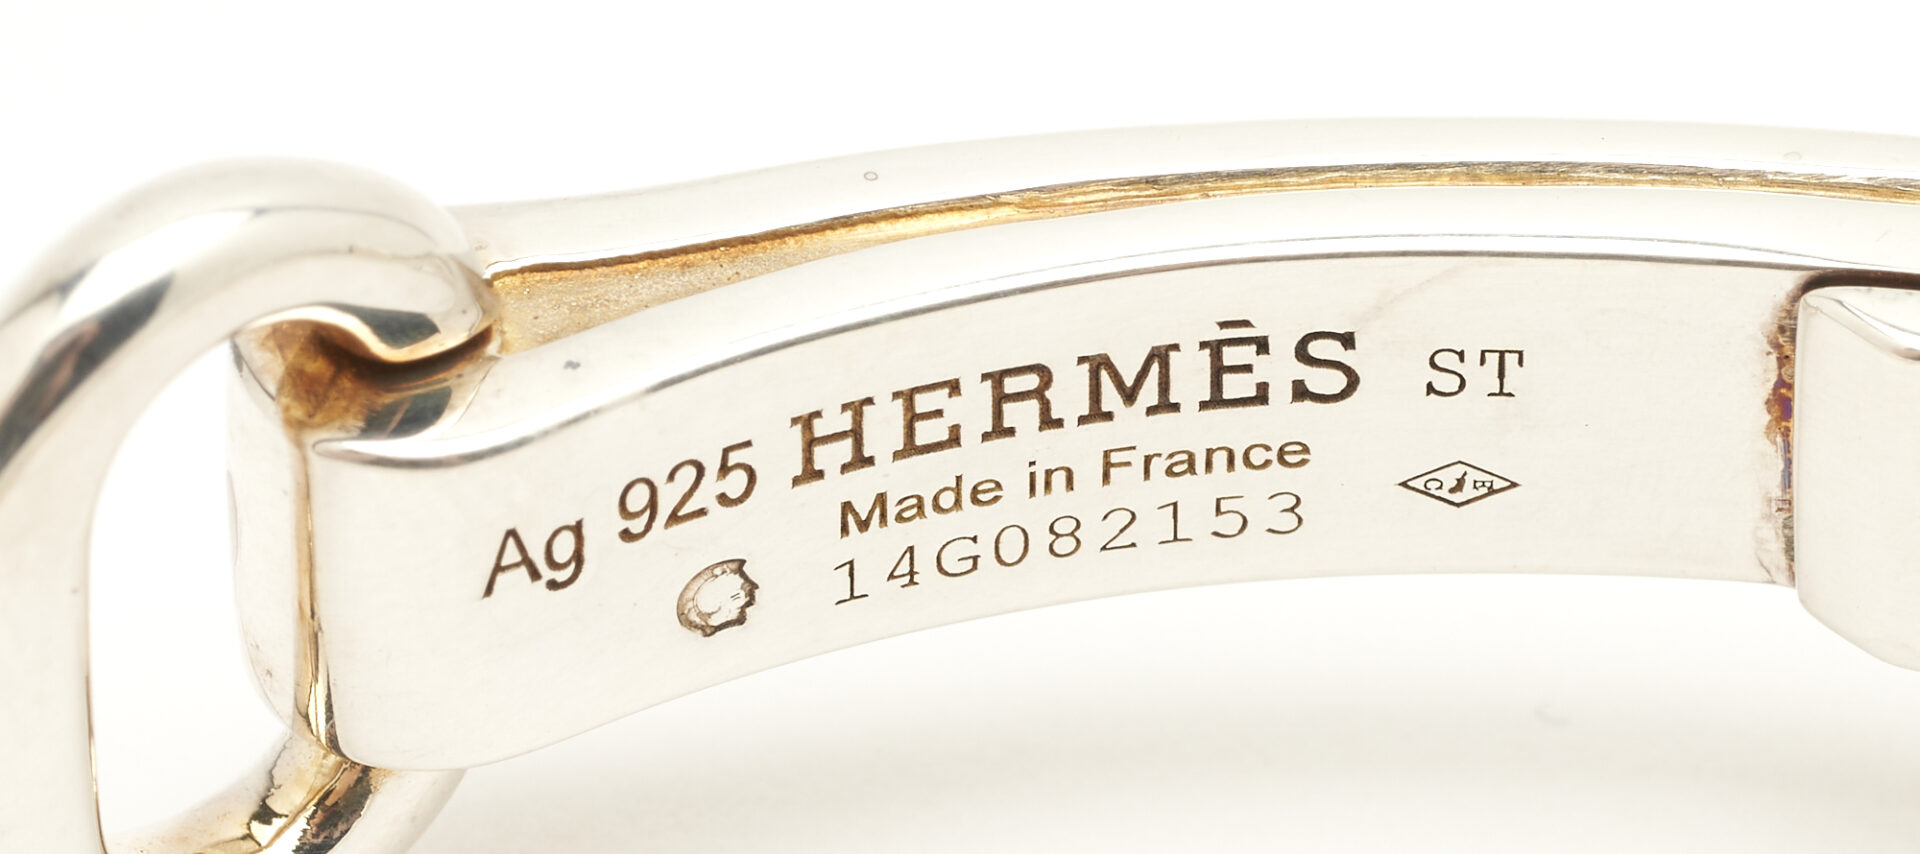 Lot 1145: 2 Hermes Sterling Silver Bangle Bracelets